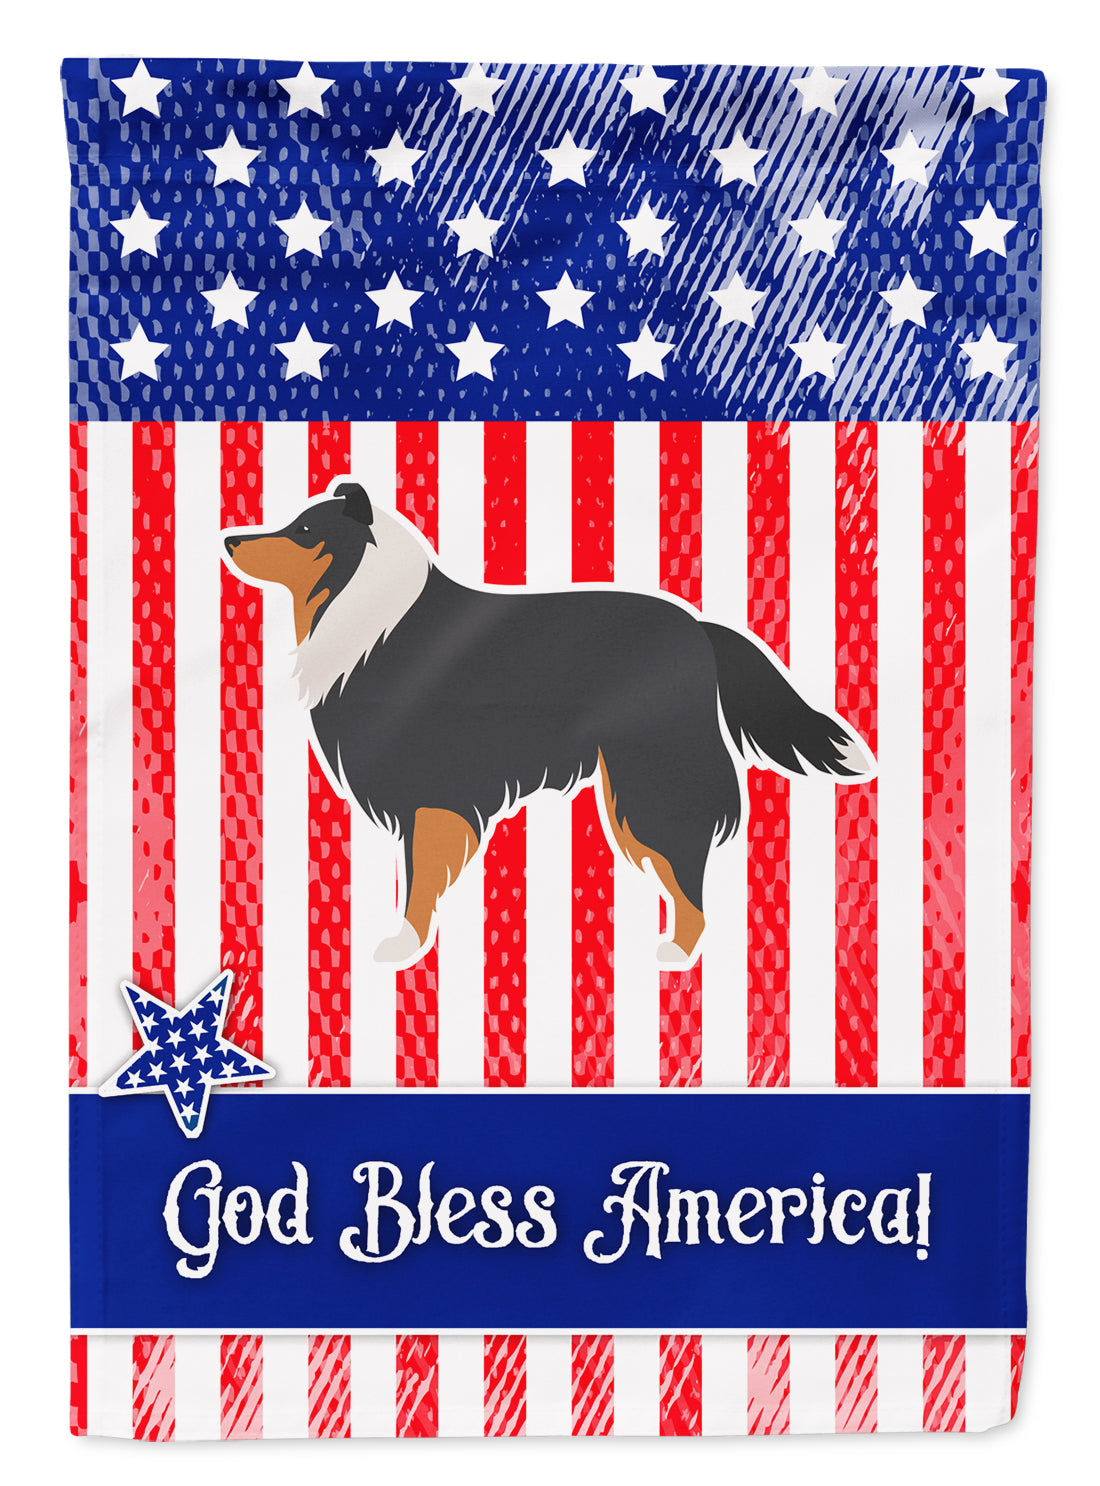 USA Patriotic Sheltie/Shetland Sheepdog Flag Garden Size BB3330GF